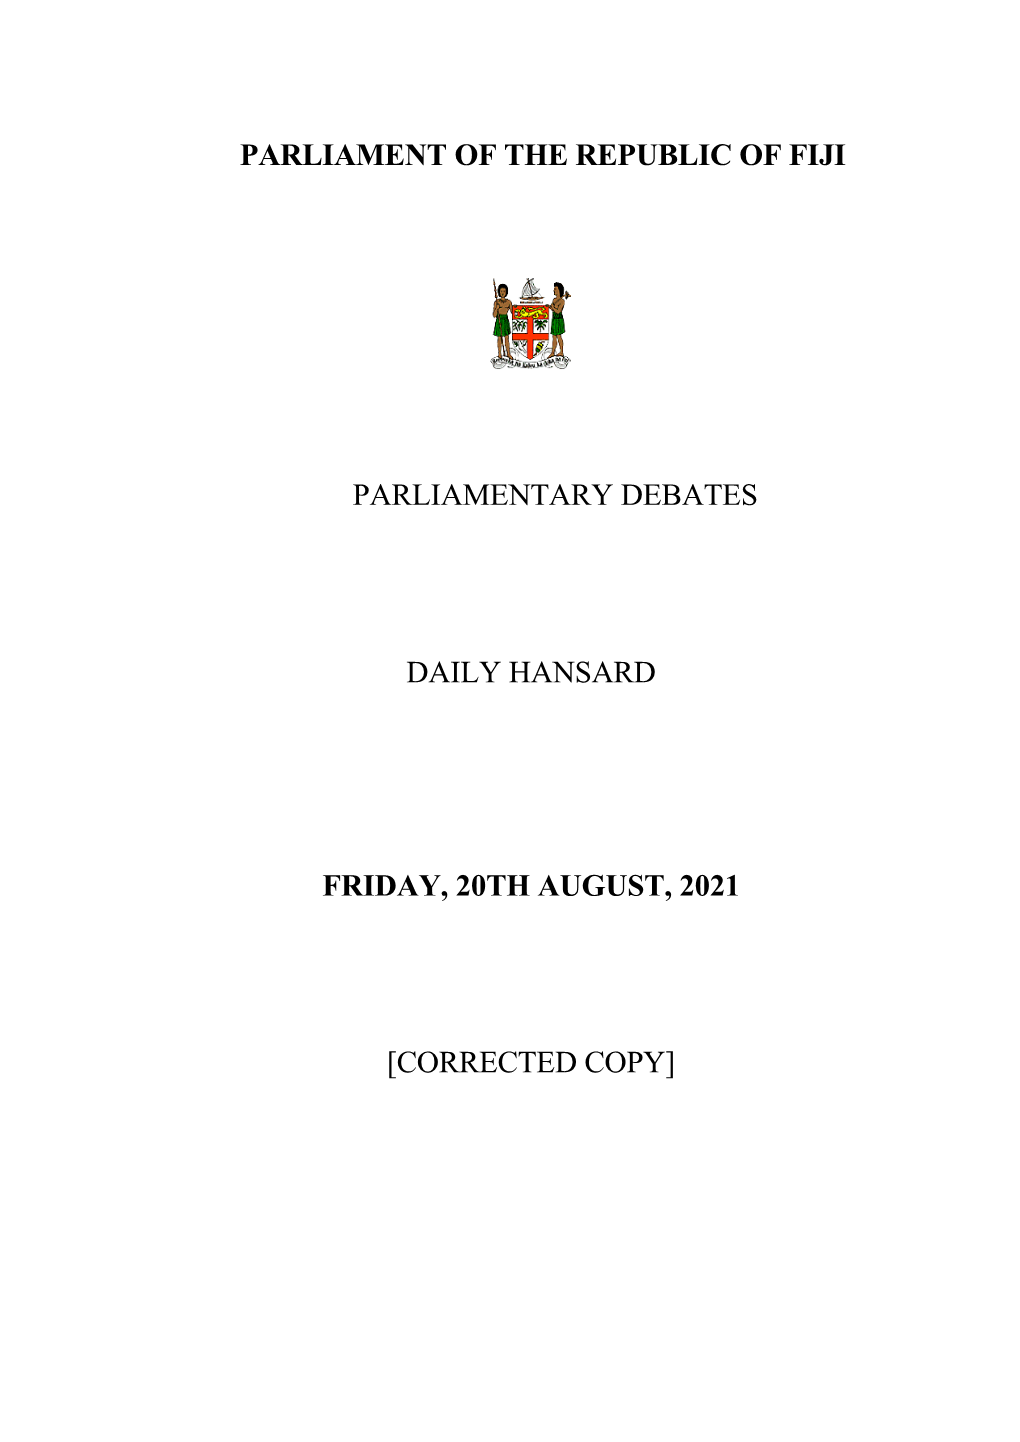 Parliament of the Republic of Fiji Parliamentary Debates Daily